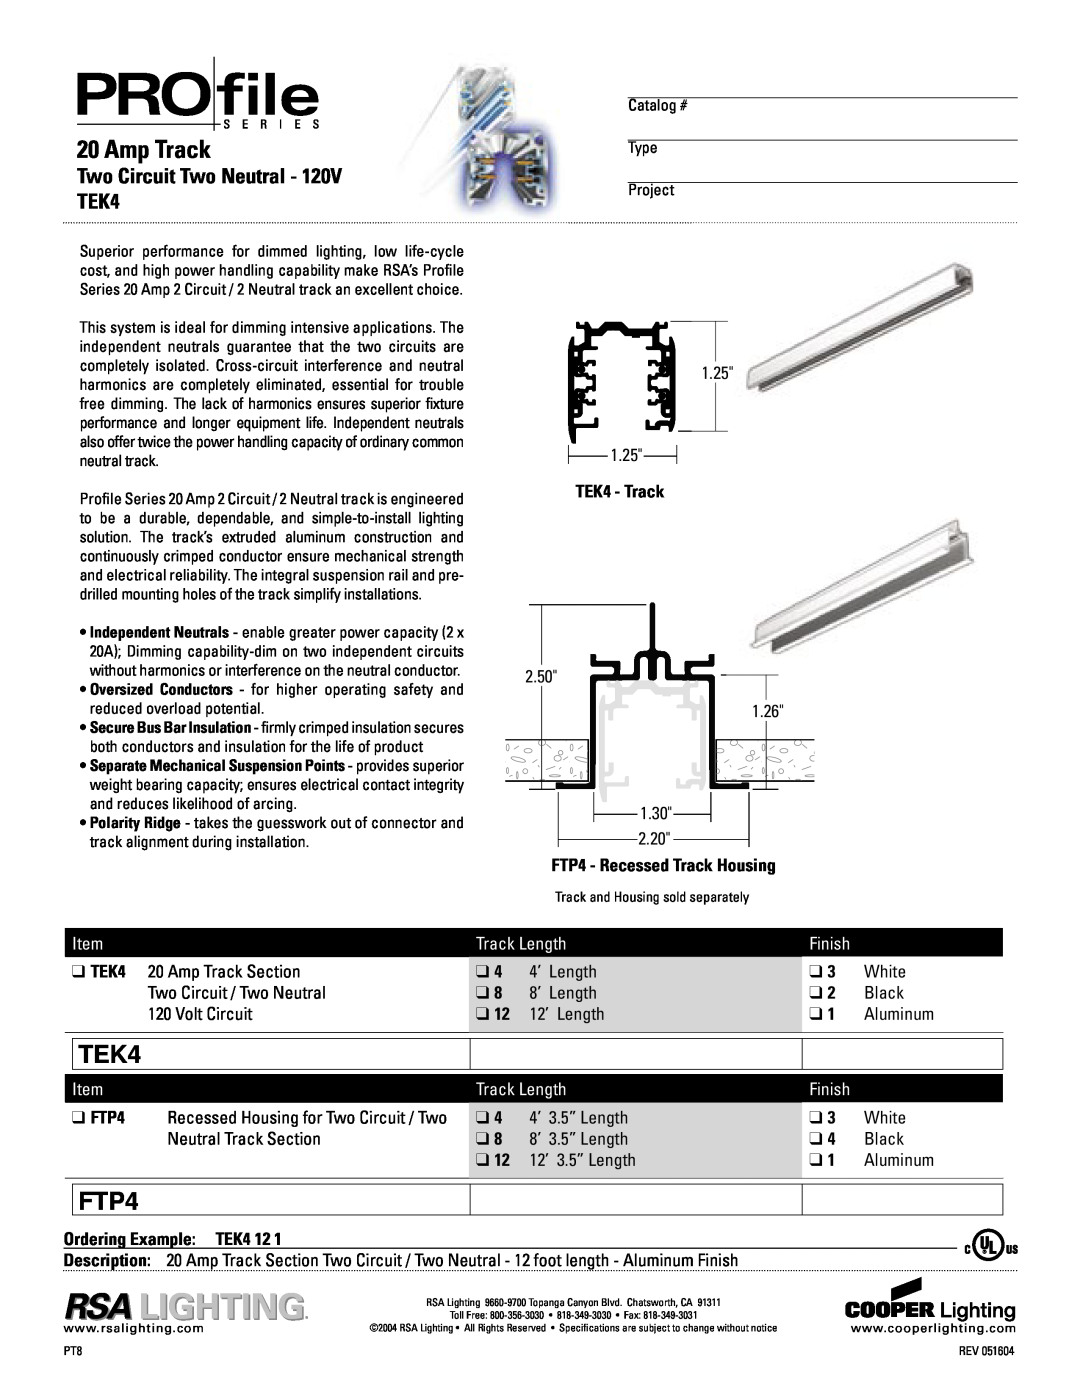 Cooper Lighting specifications TEK4 - Track, FTP4 - Recessed Track Housing, Track Length, Finish, Ordering Example TEK4 